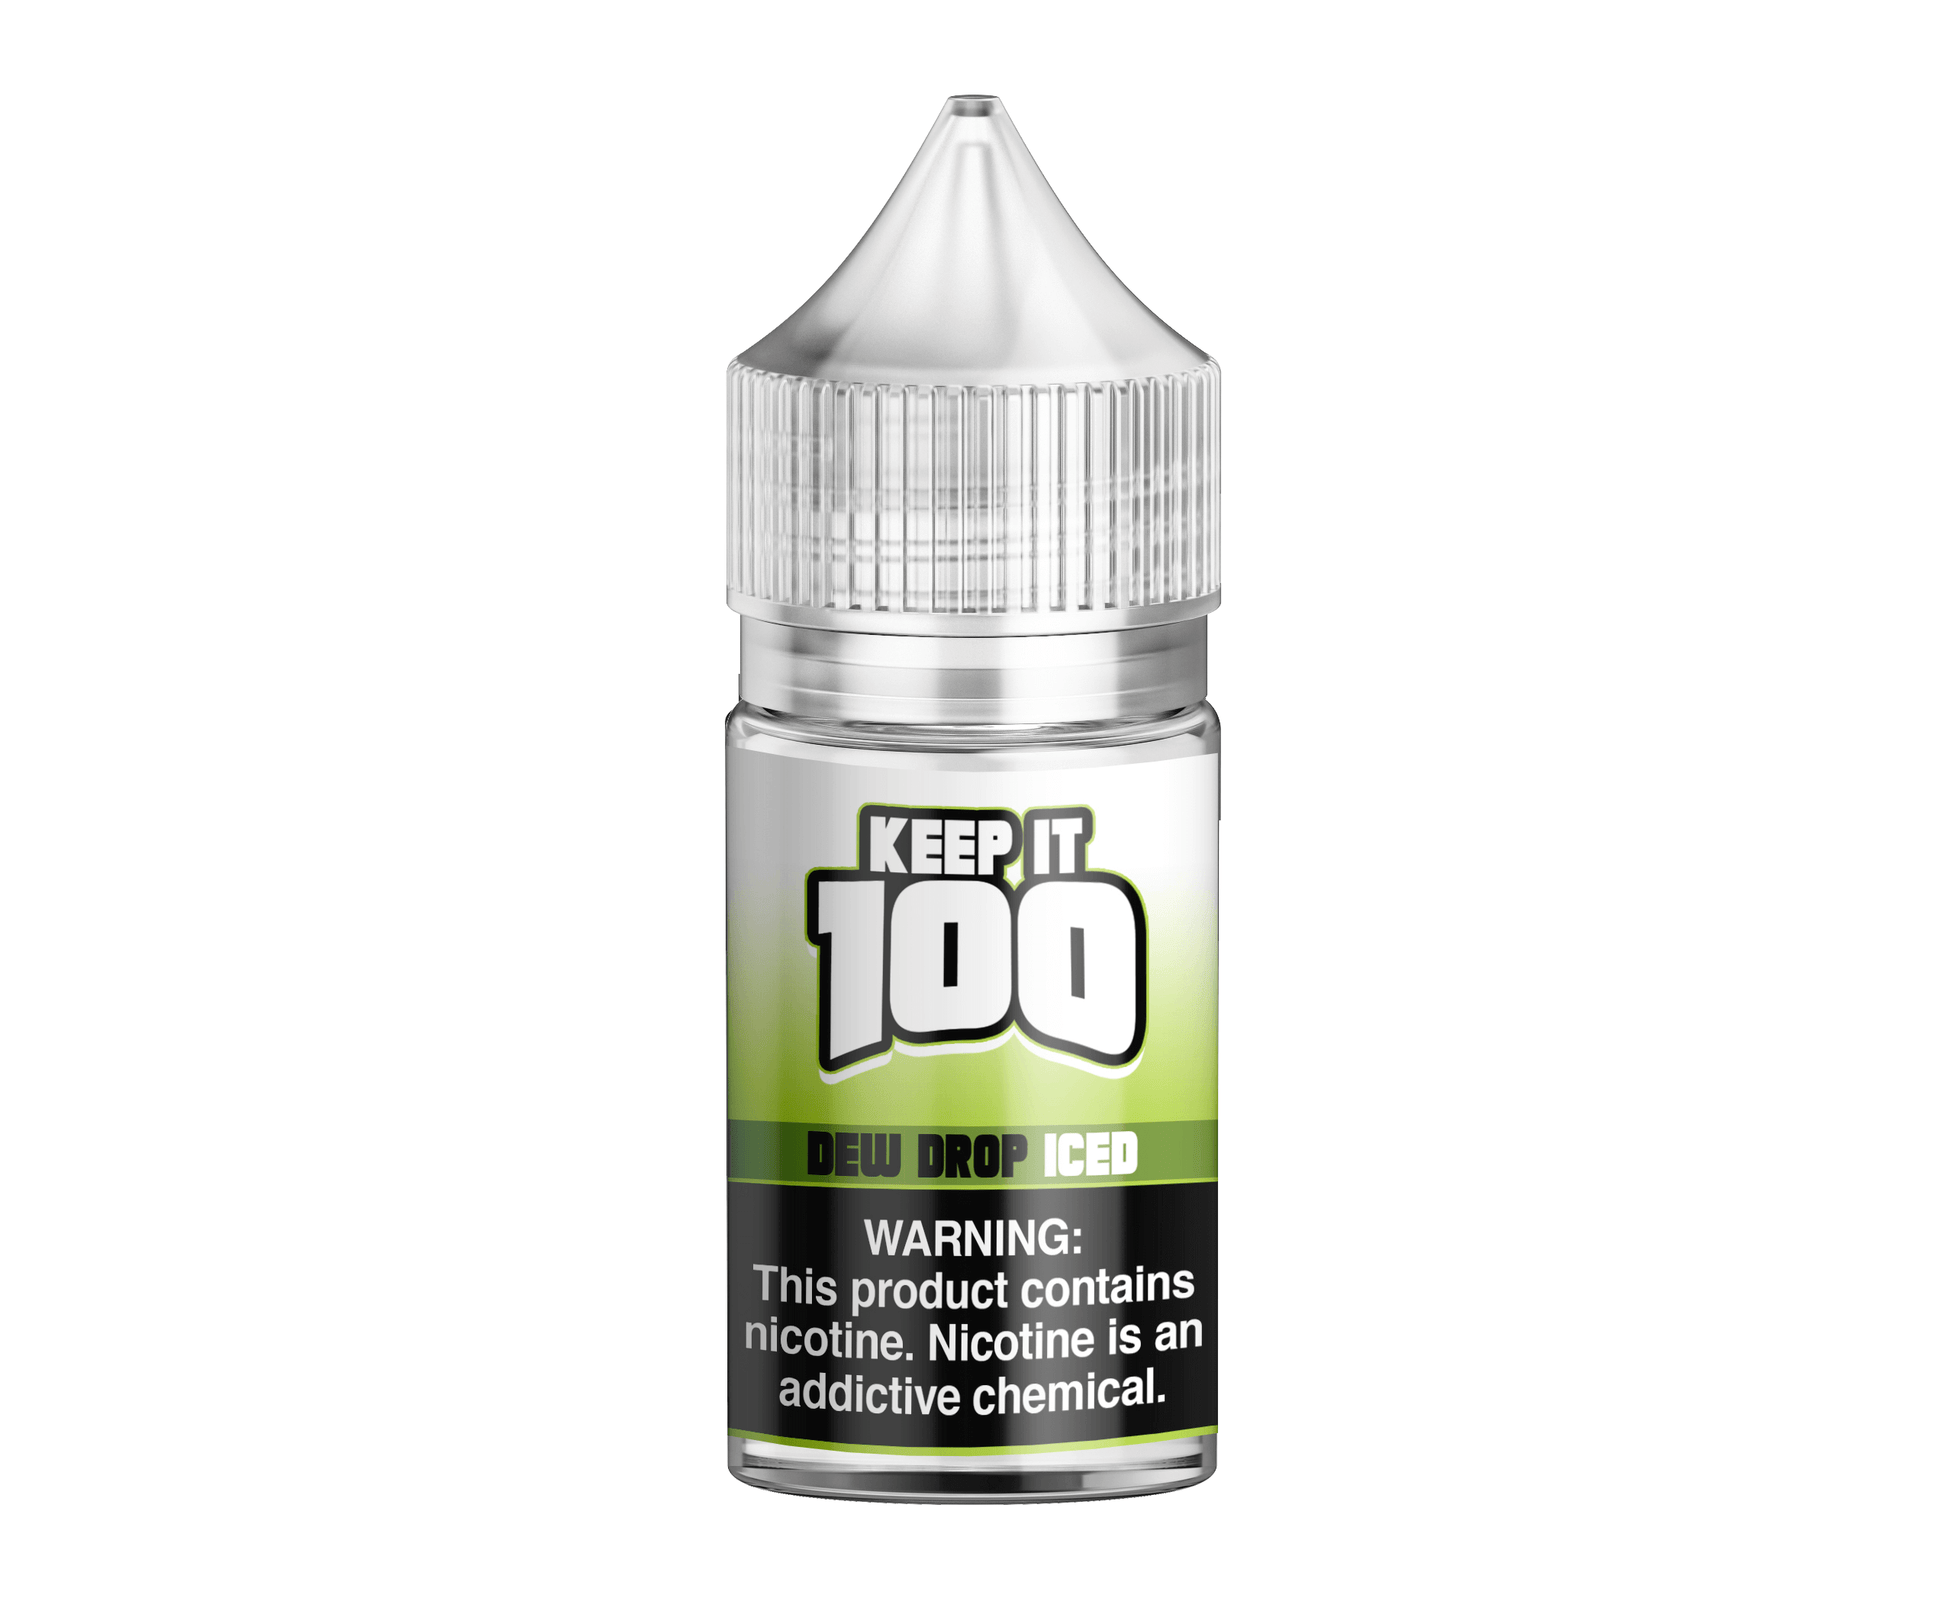 Dew Drop Iced by Keep It 100 Tobacco-Free Nicotine Salt Series 30mL Bottle